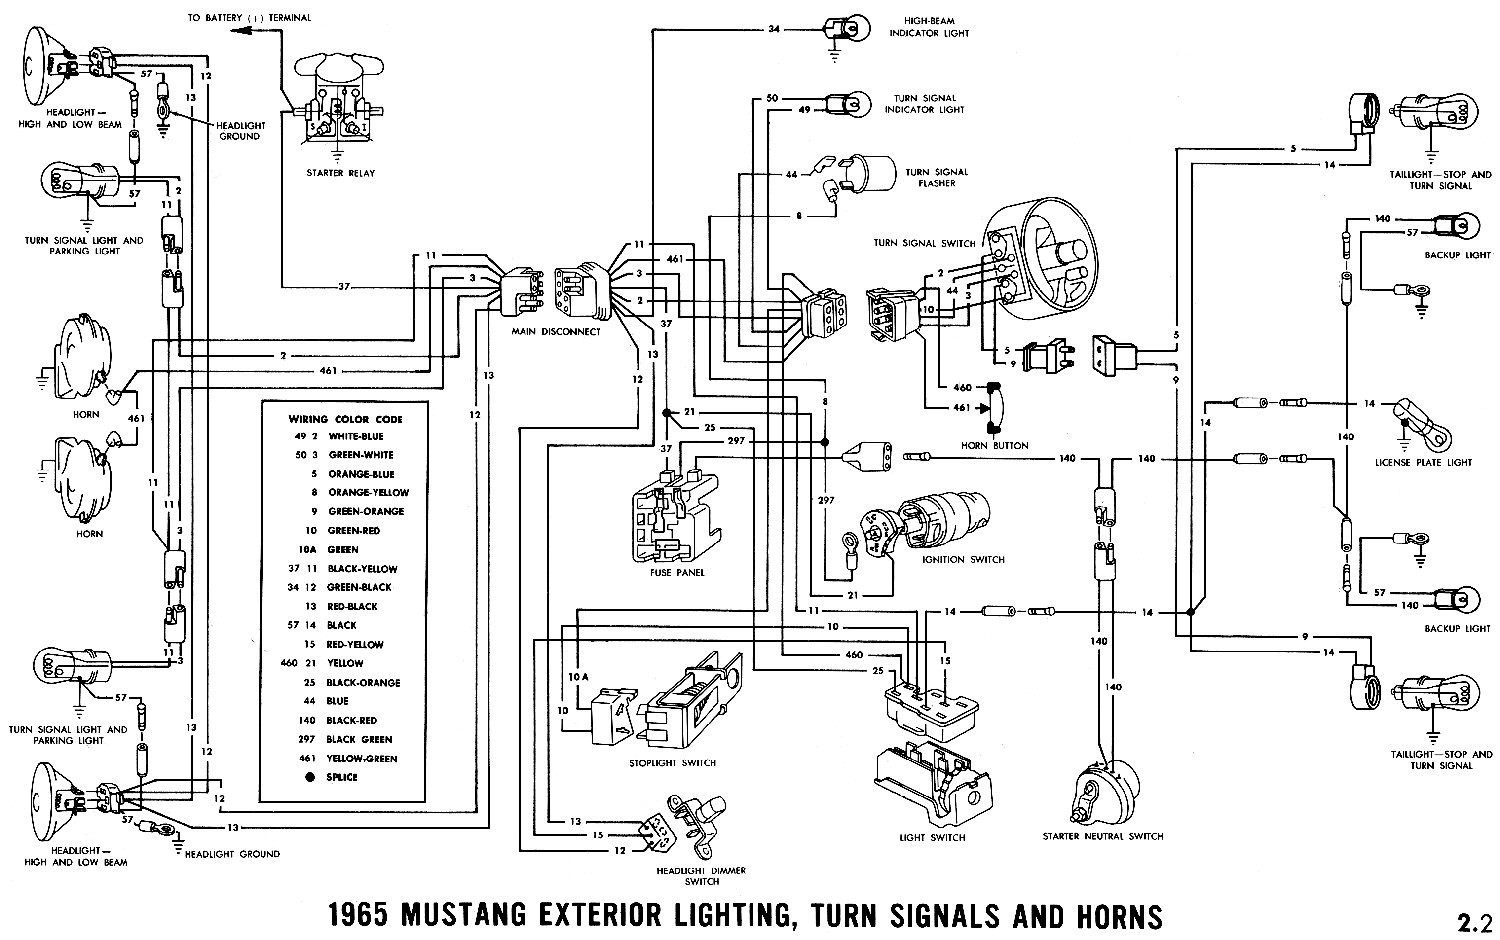 1965 Mustang Wiring Diagram Inspirational 1968 Mustang Wiring Diagrams Evolving software with 66 Diagram